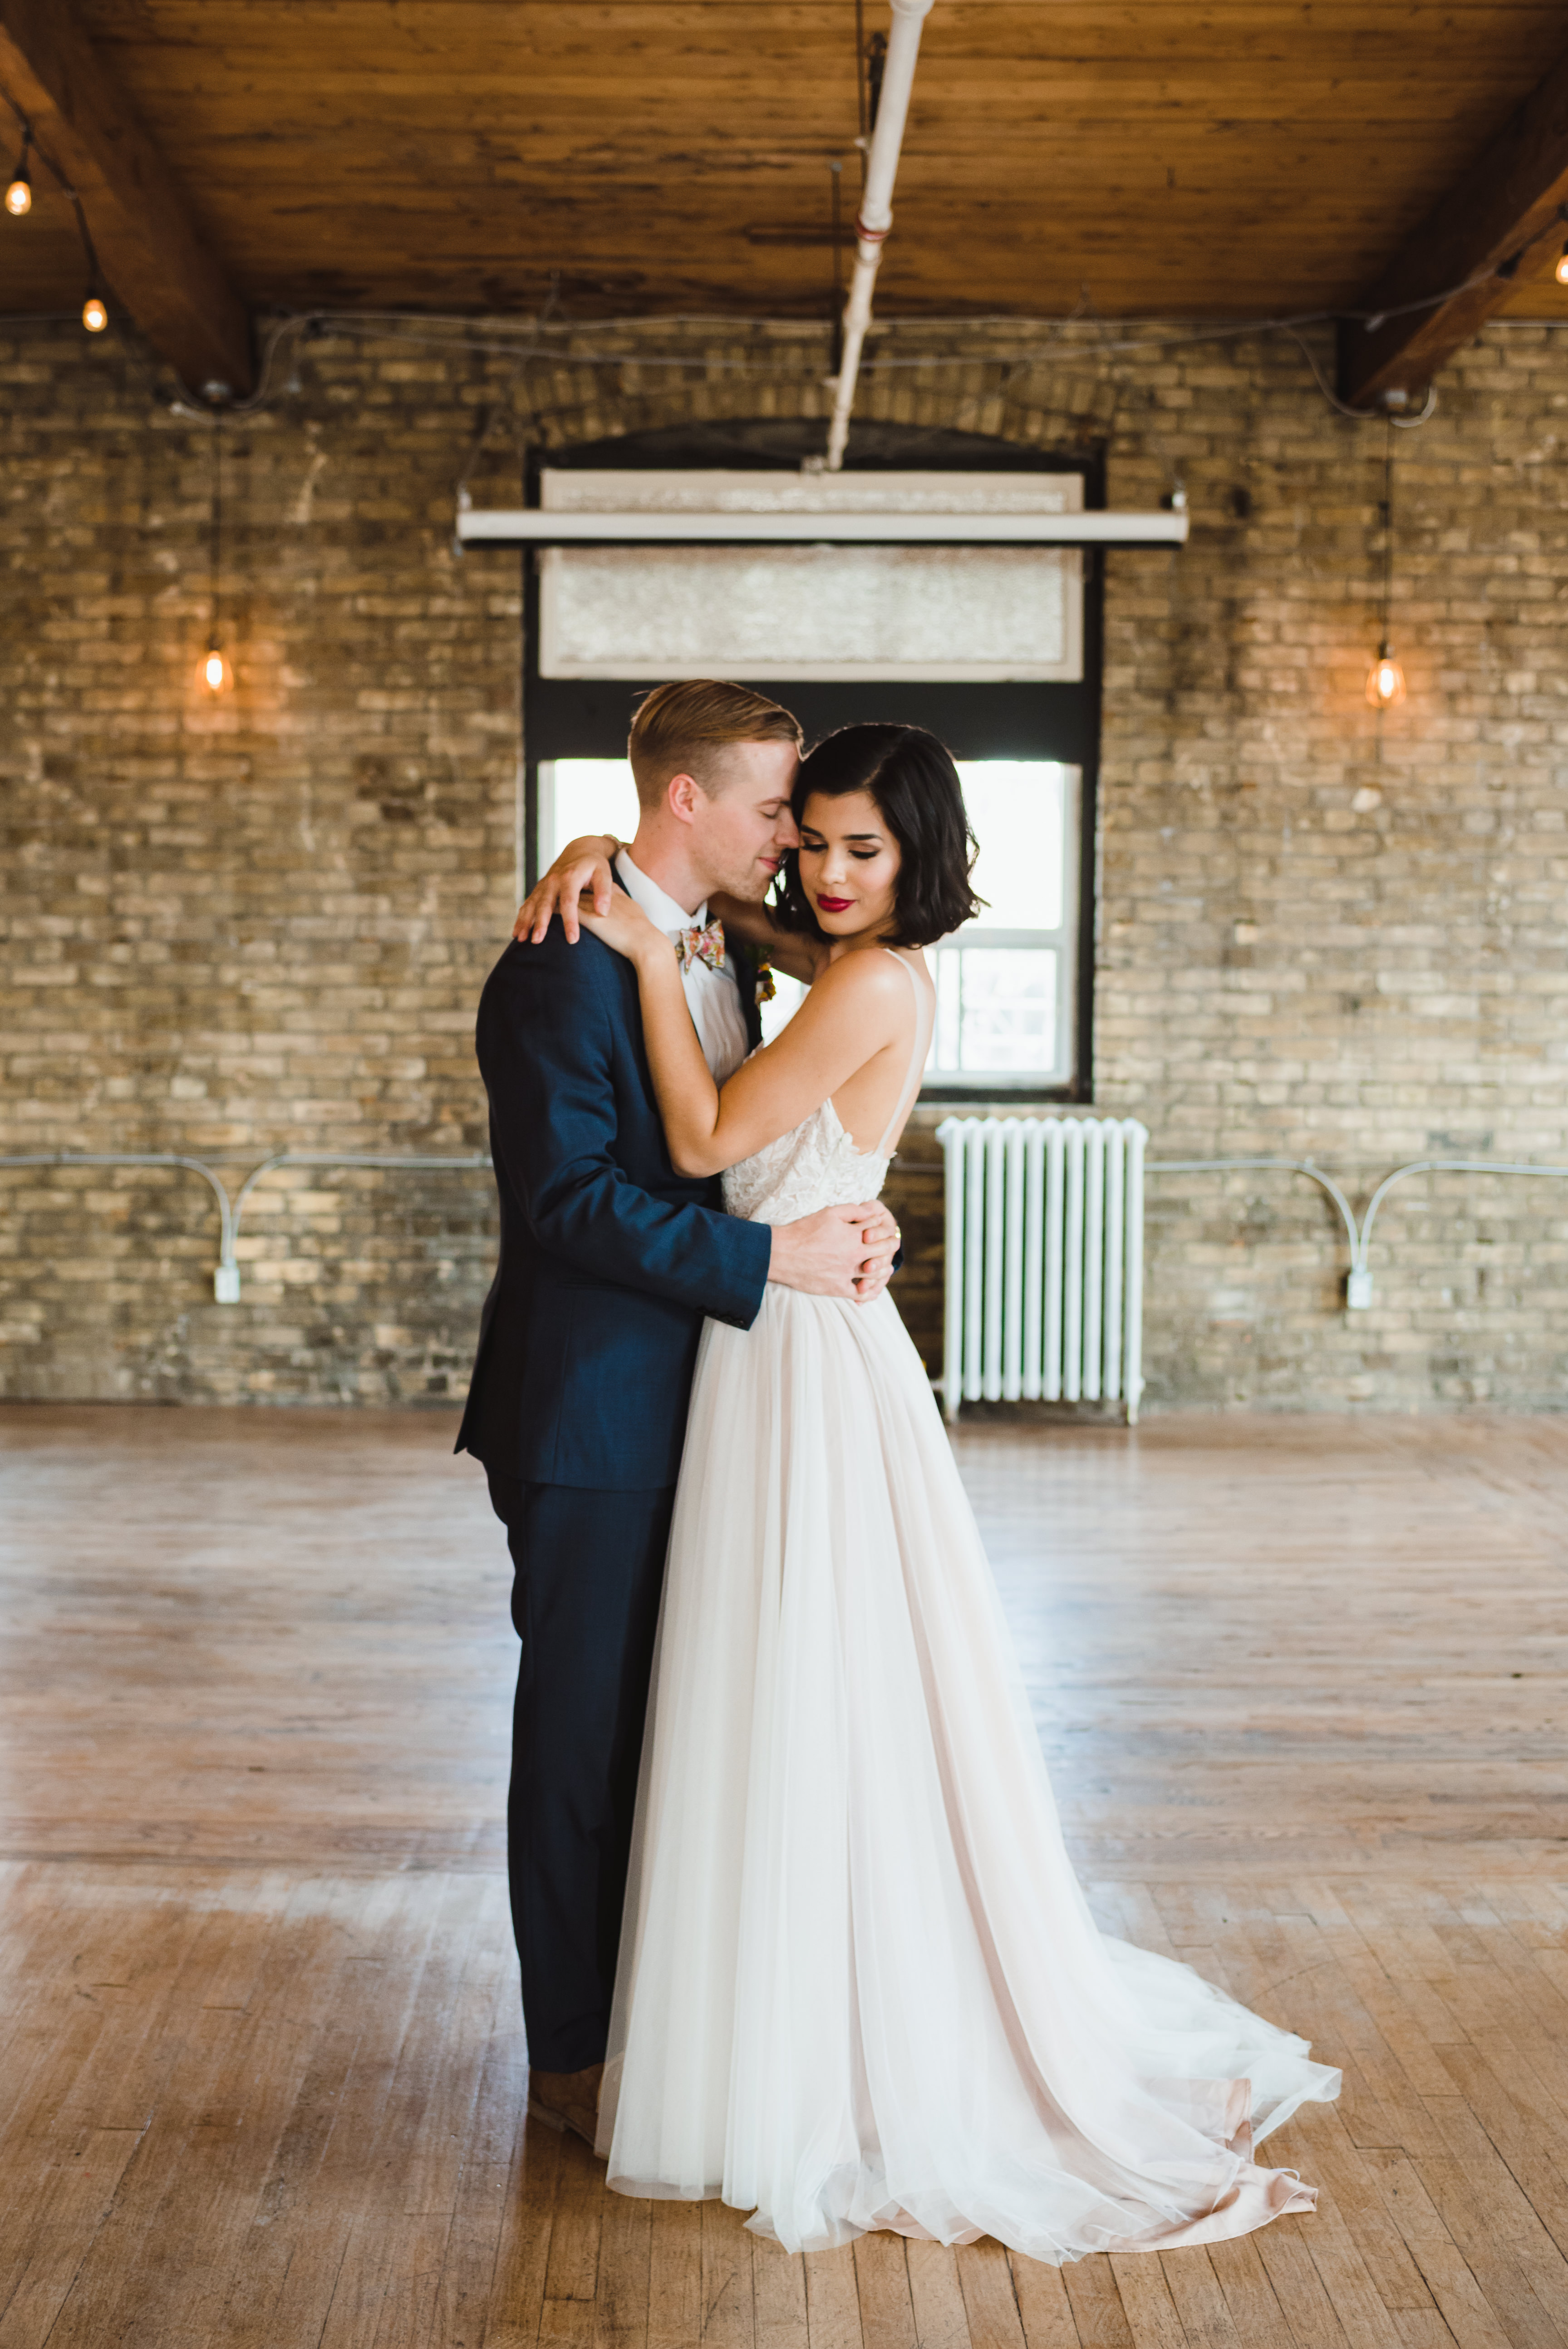 bride and groom loving embrace inside old brick building Toronto wedding photography